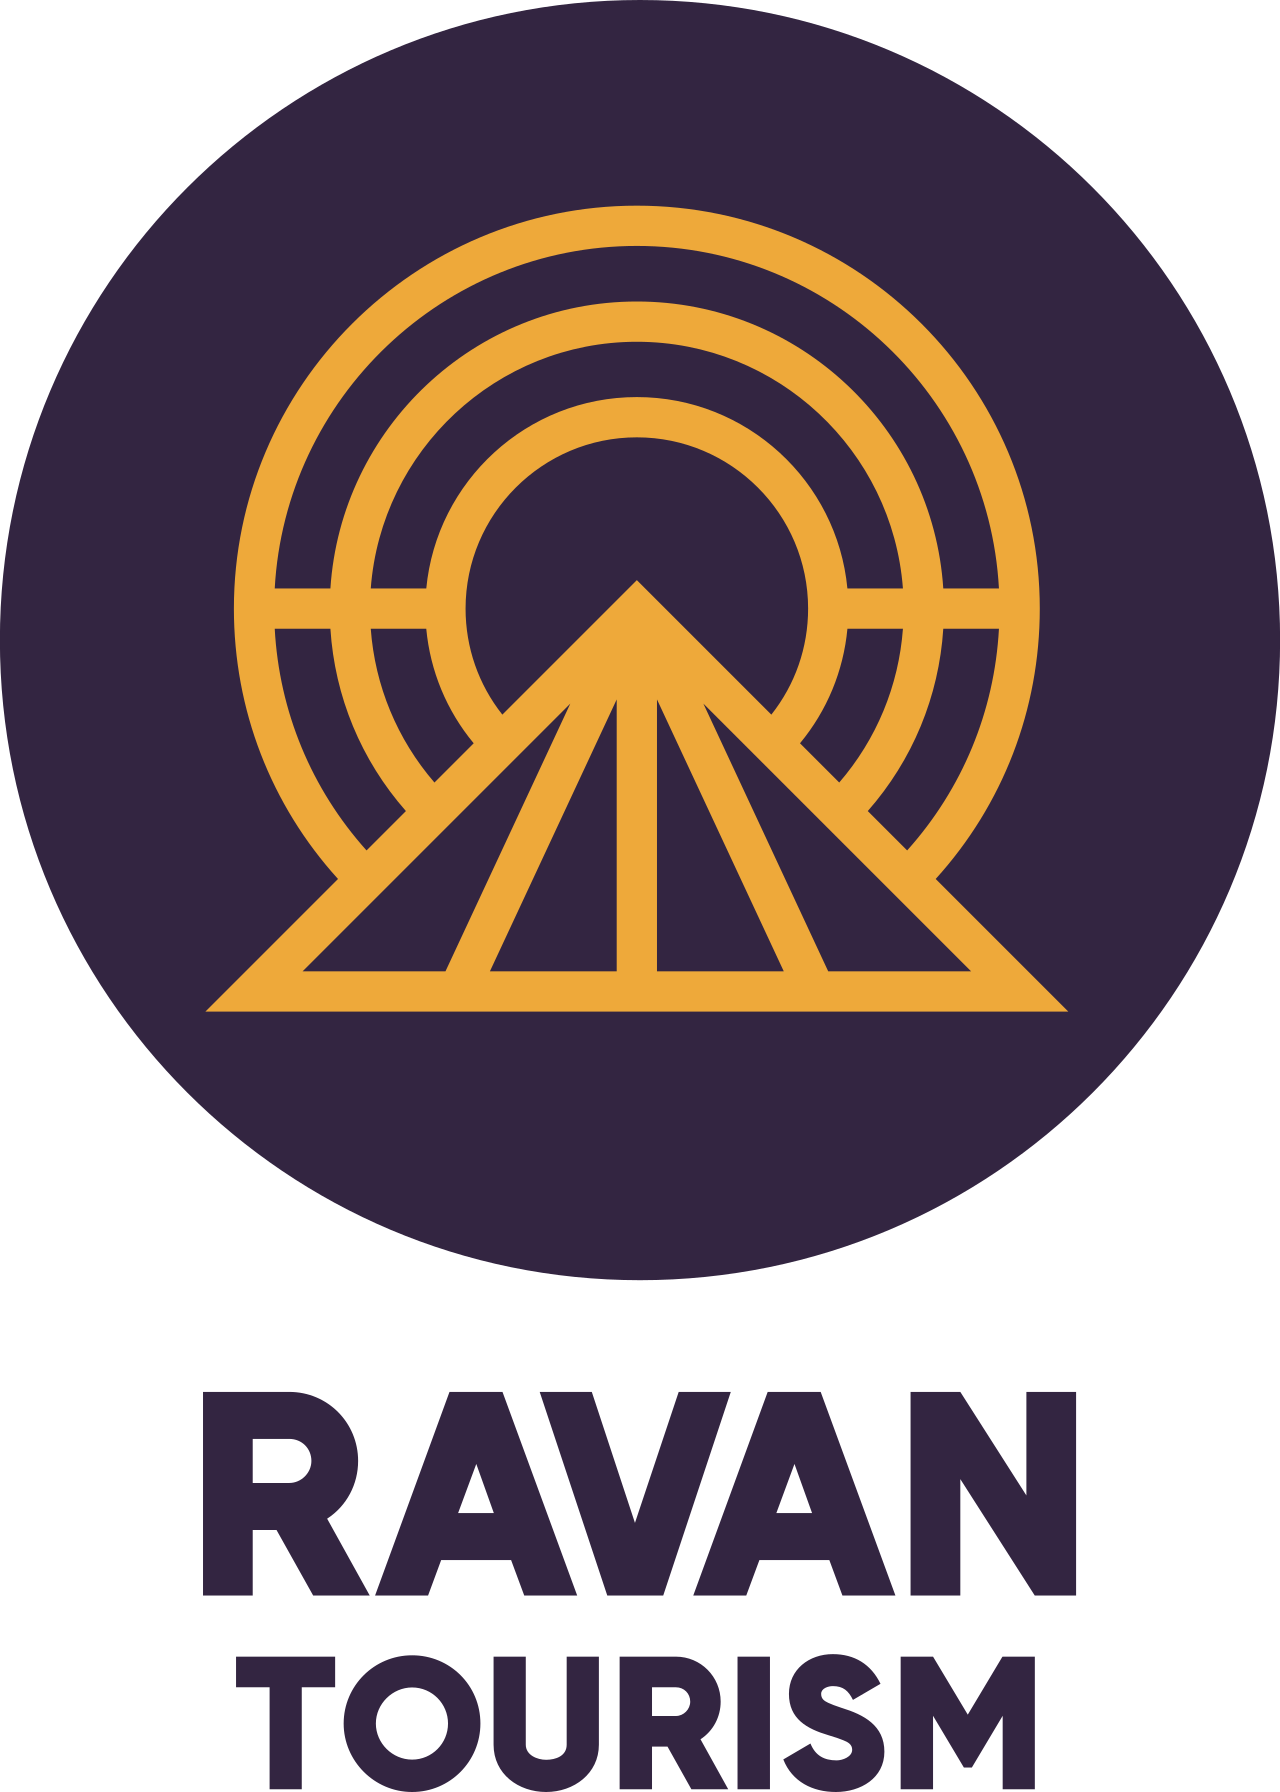 RAVAN's web page